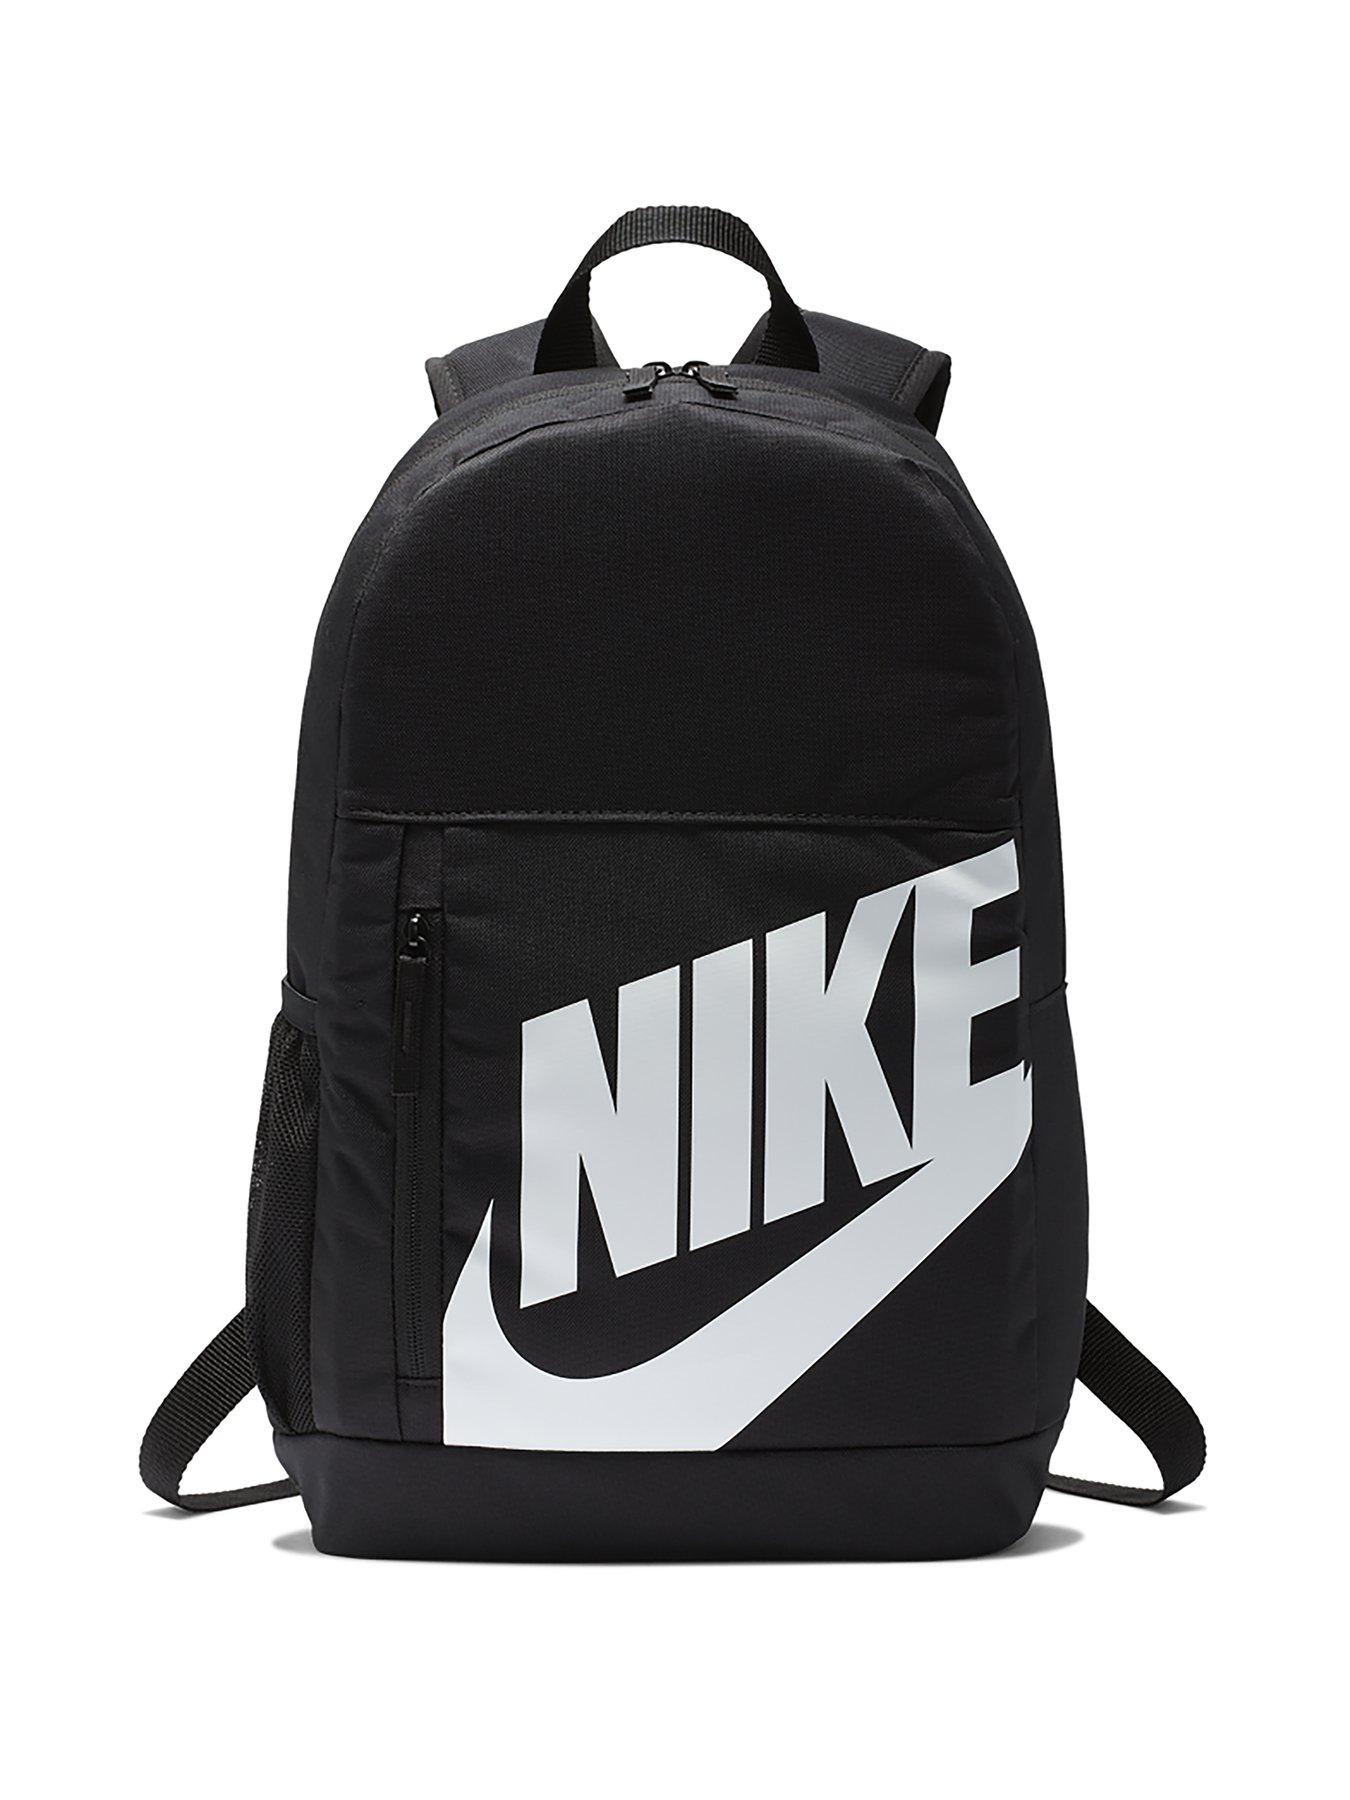 nike backpack black friday